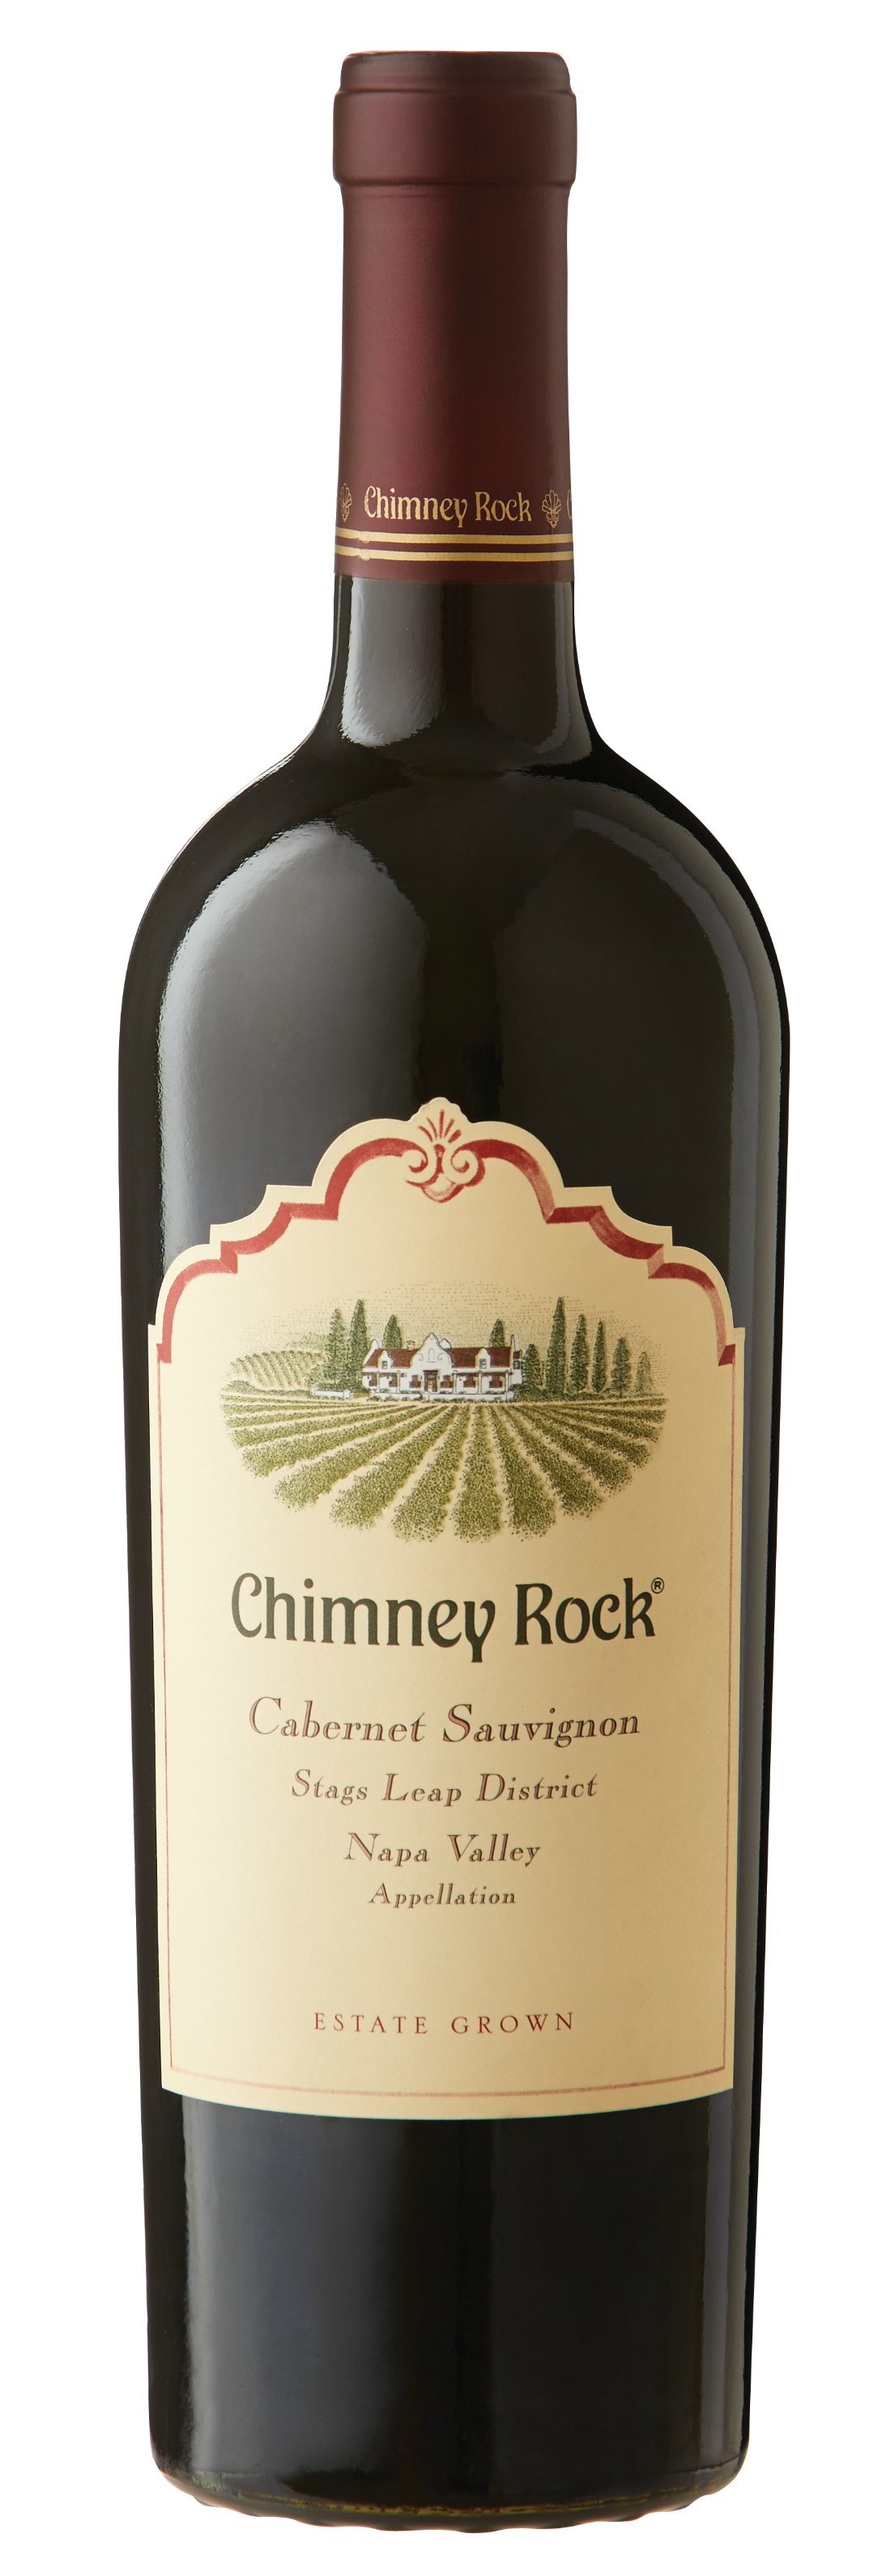 Chimney Rock Cabernet Sauvignon 2